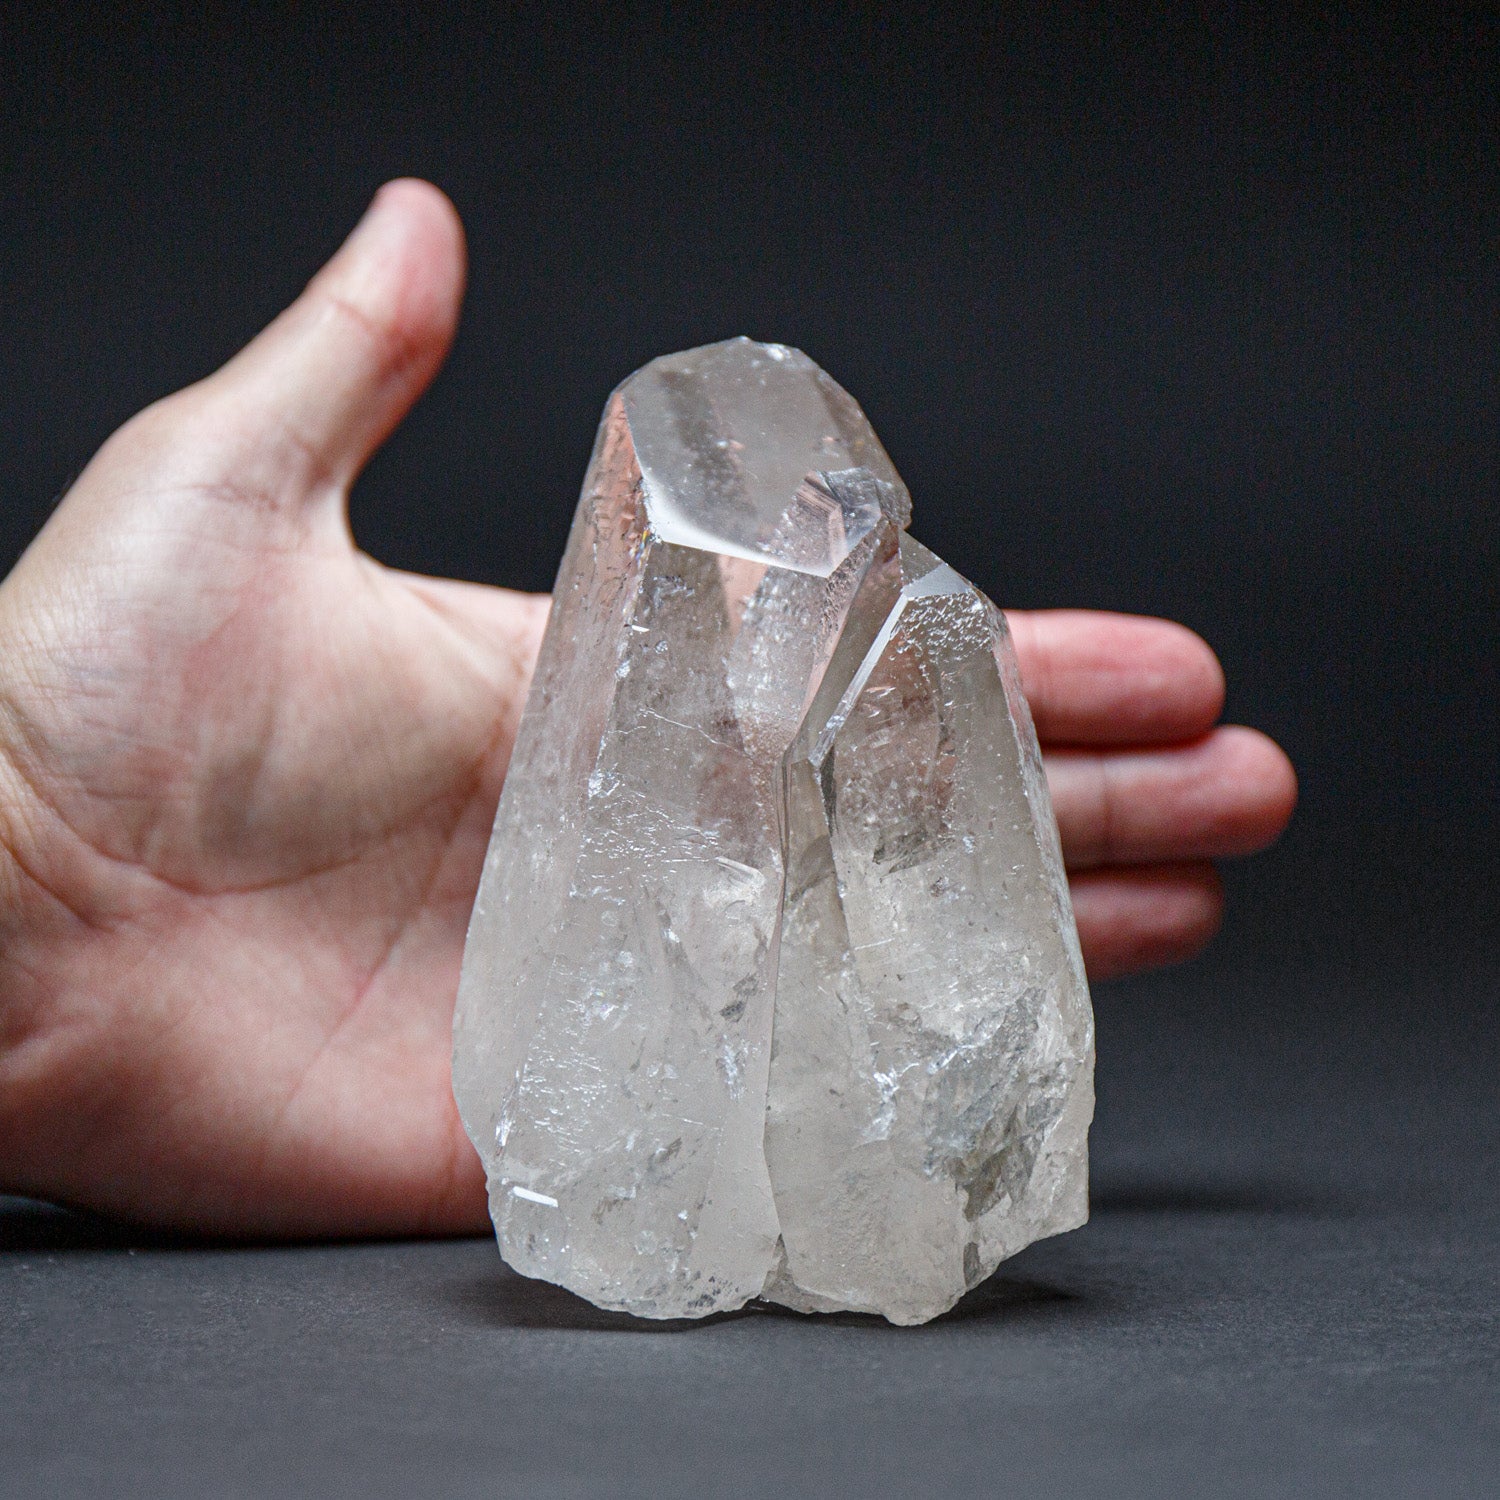 Genuine Clear Quartz Crystal from Brazil (1.7 lbs)